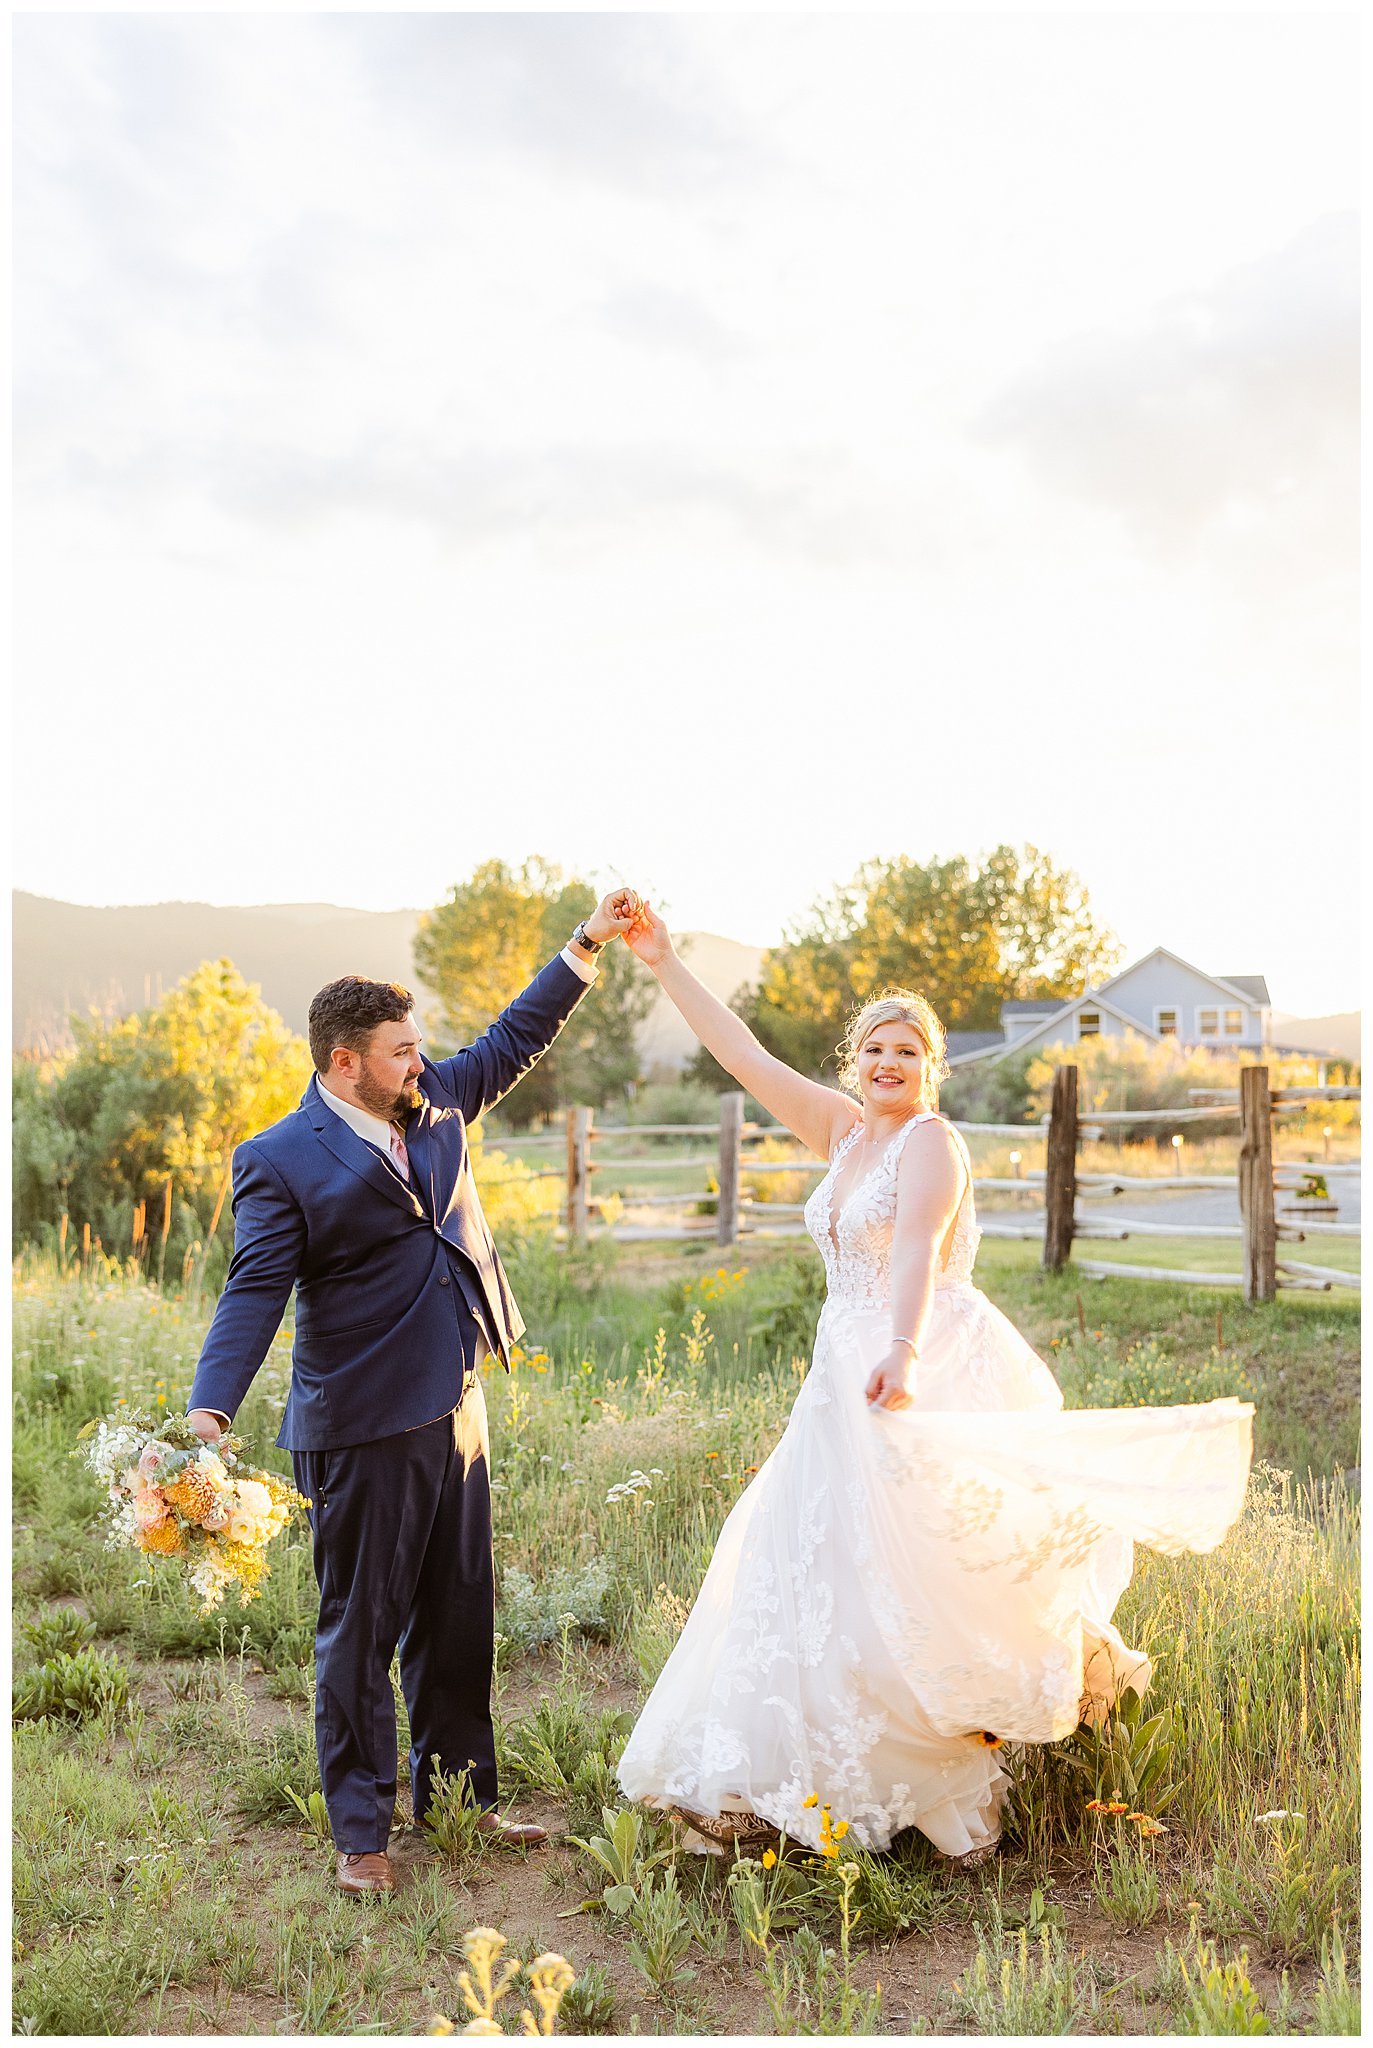 Dancing at Mountain Wedding | Kirsten and Wyatt